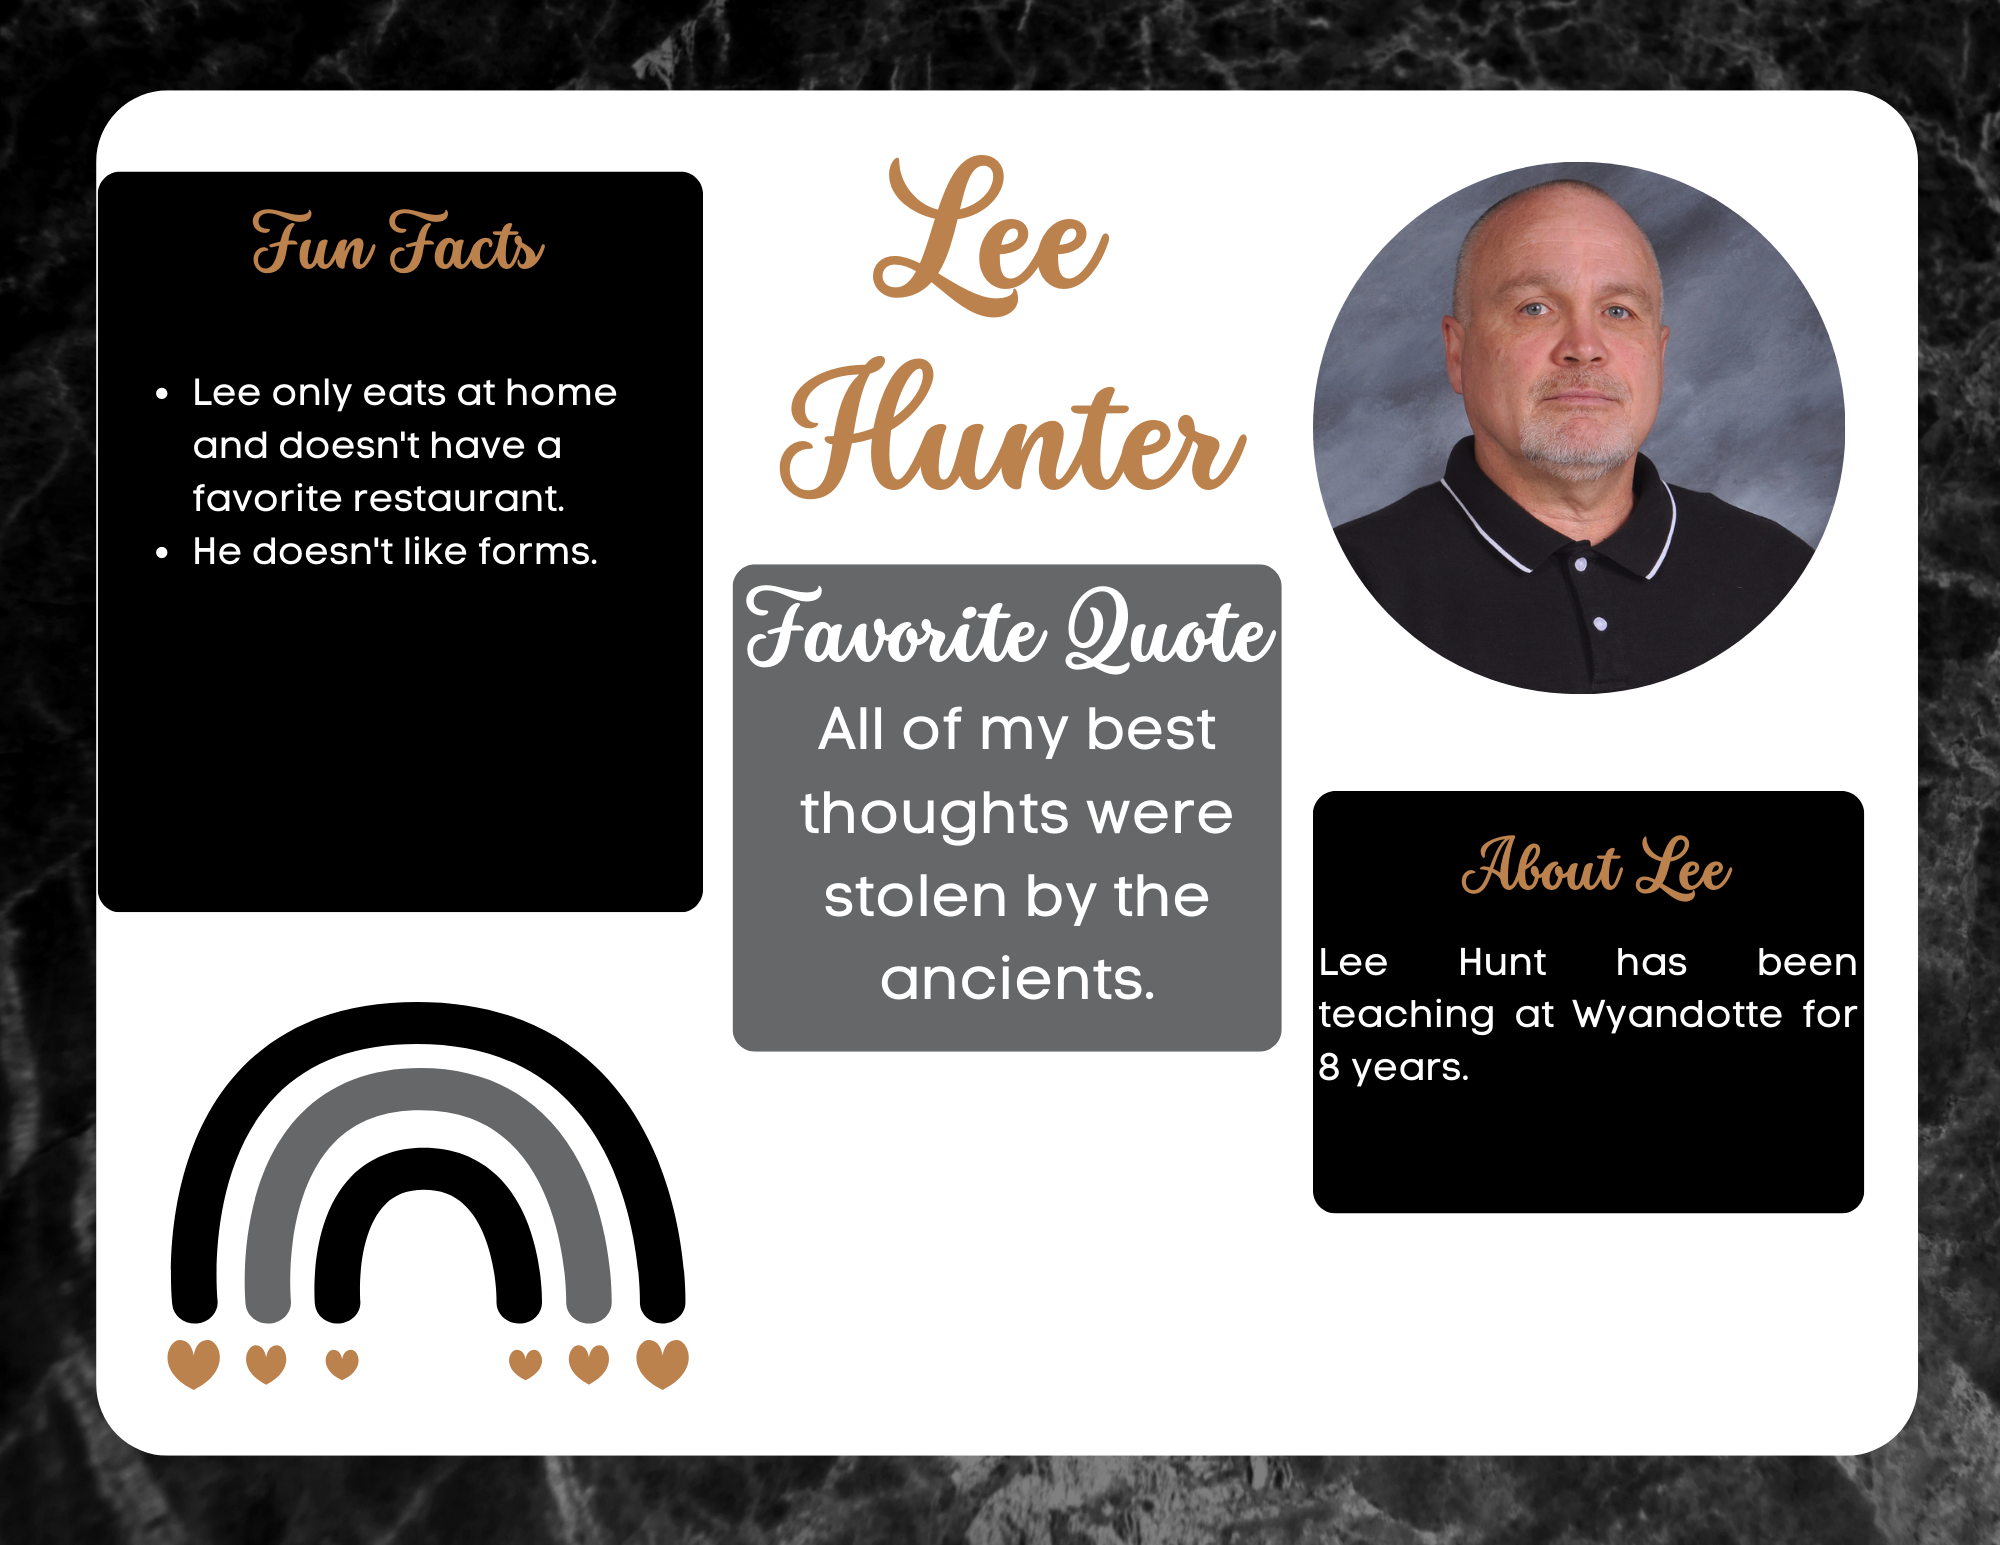 Teacher Spotlight: Lee Hunt